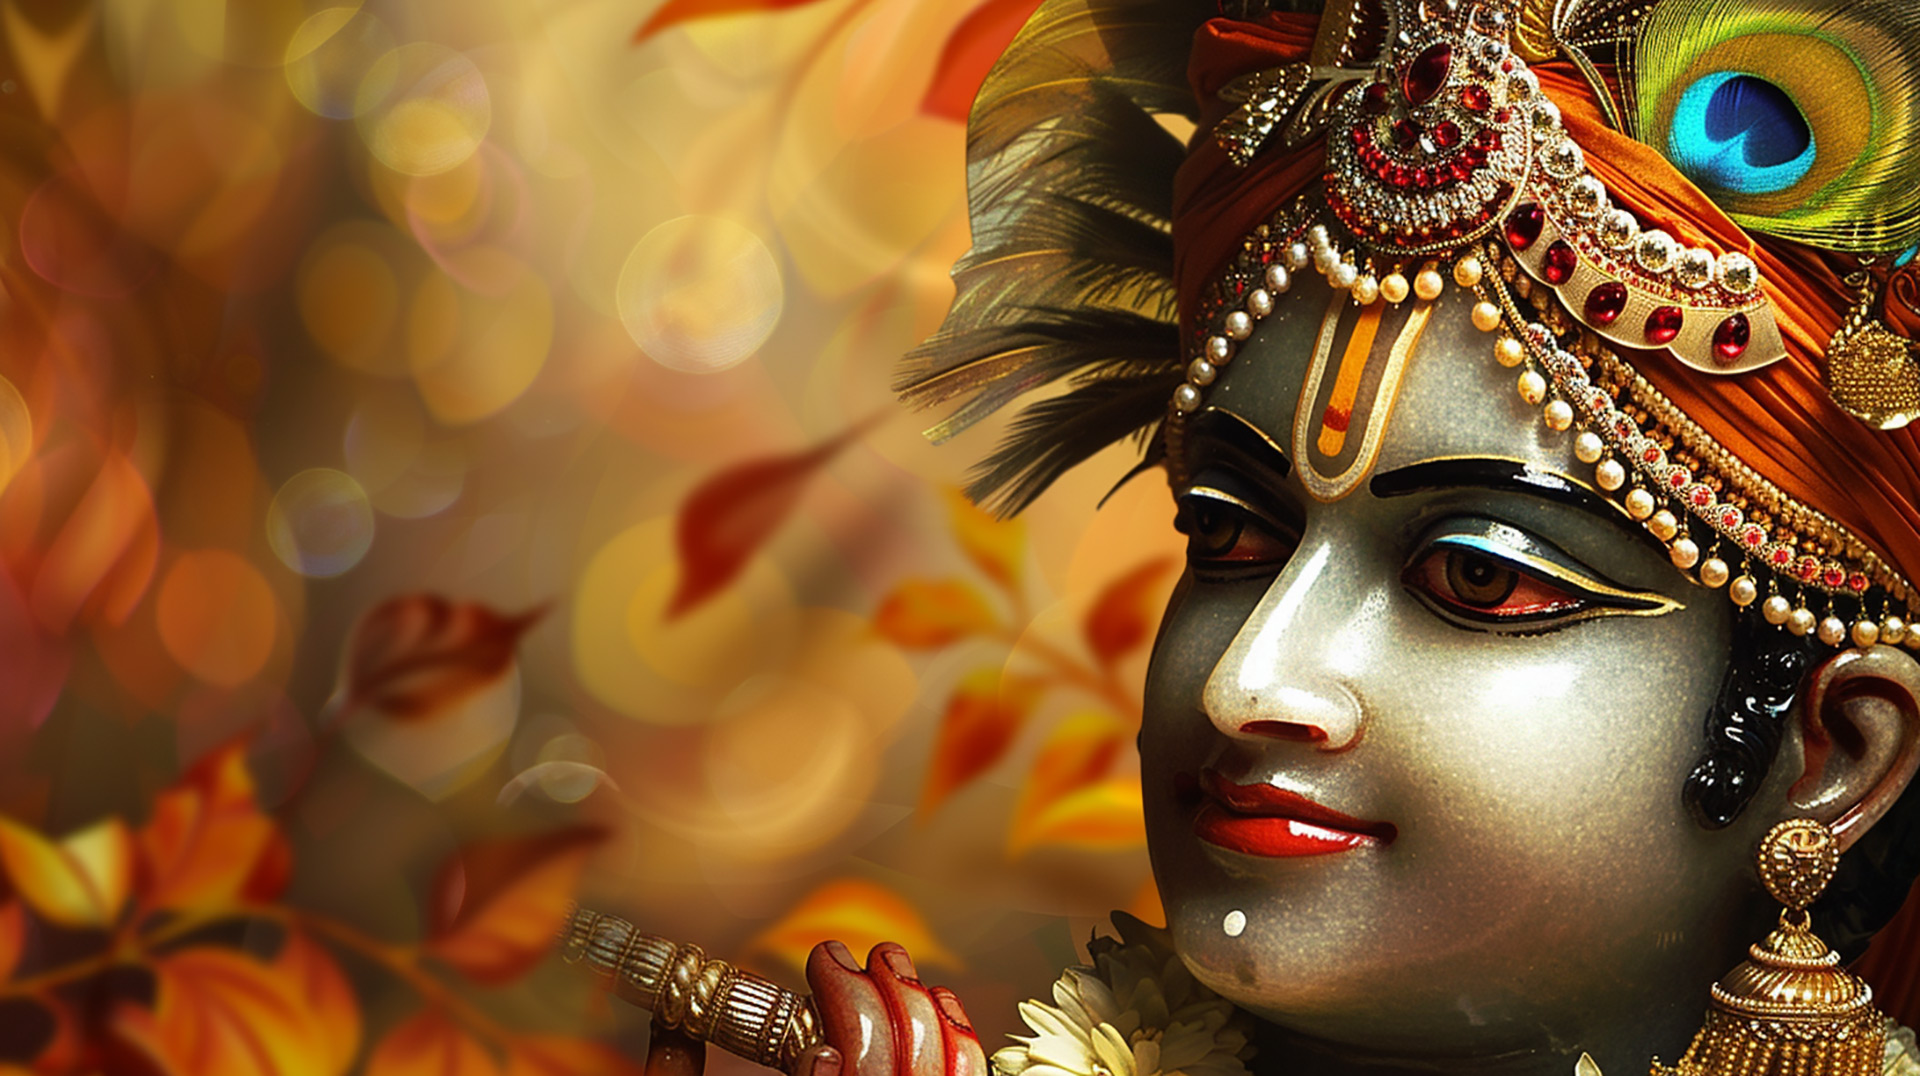 Divine Krishna: Wallpaper Capturing the Enchanting Flute Player